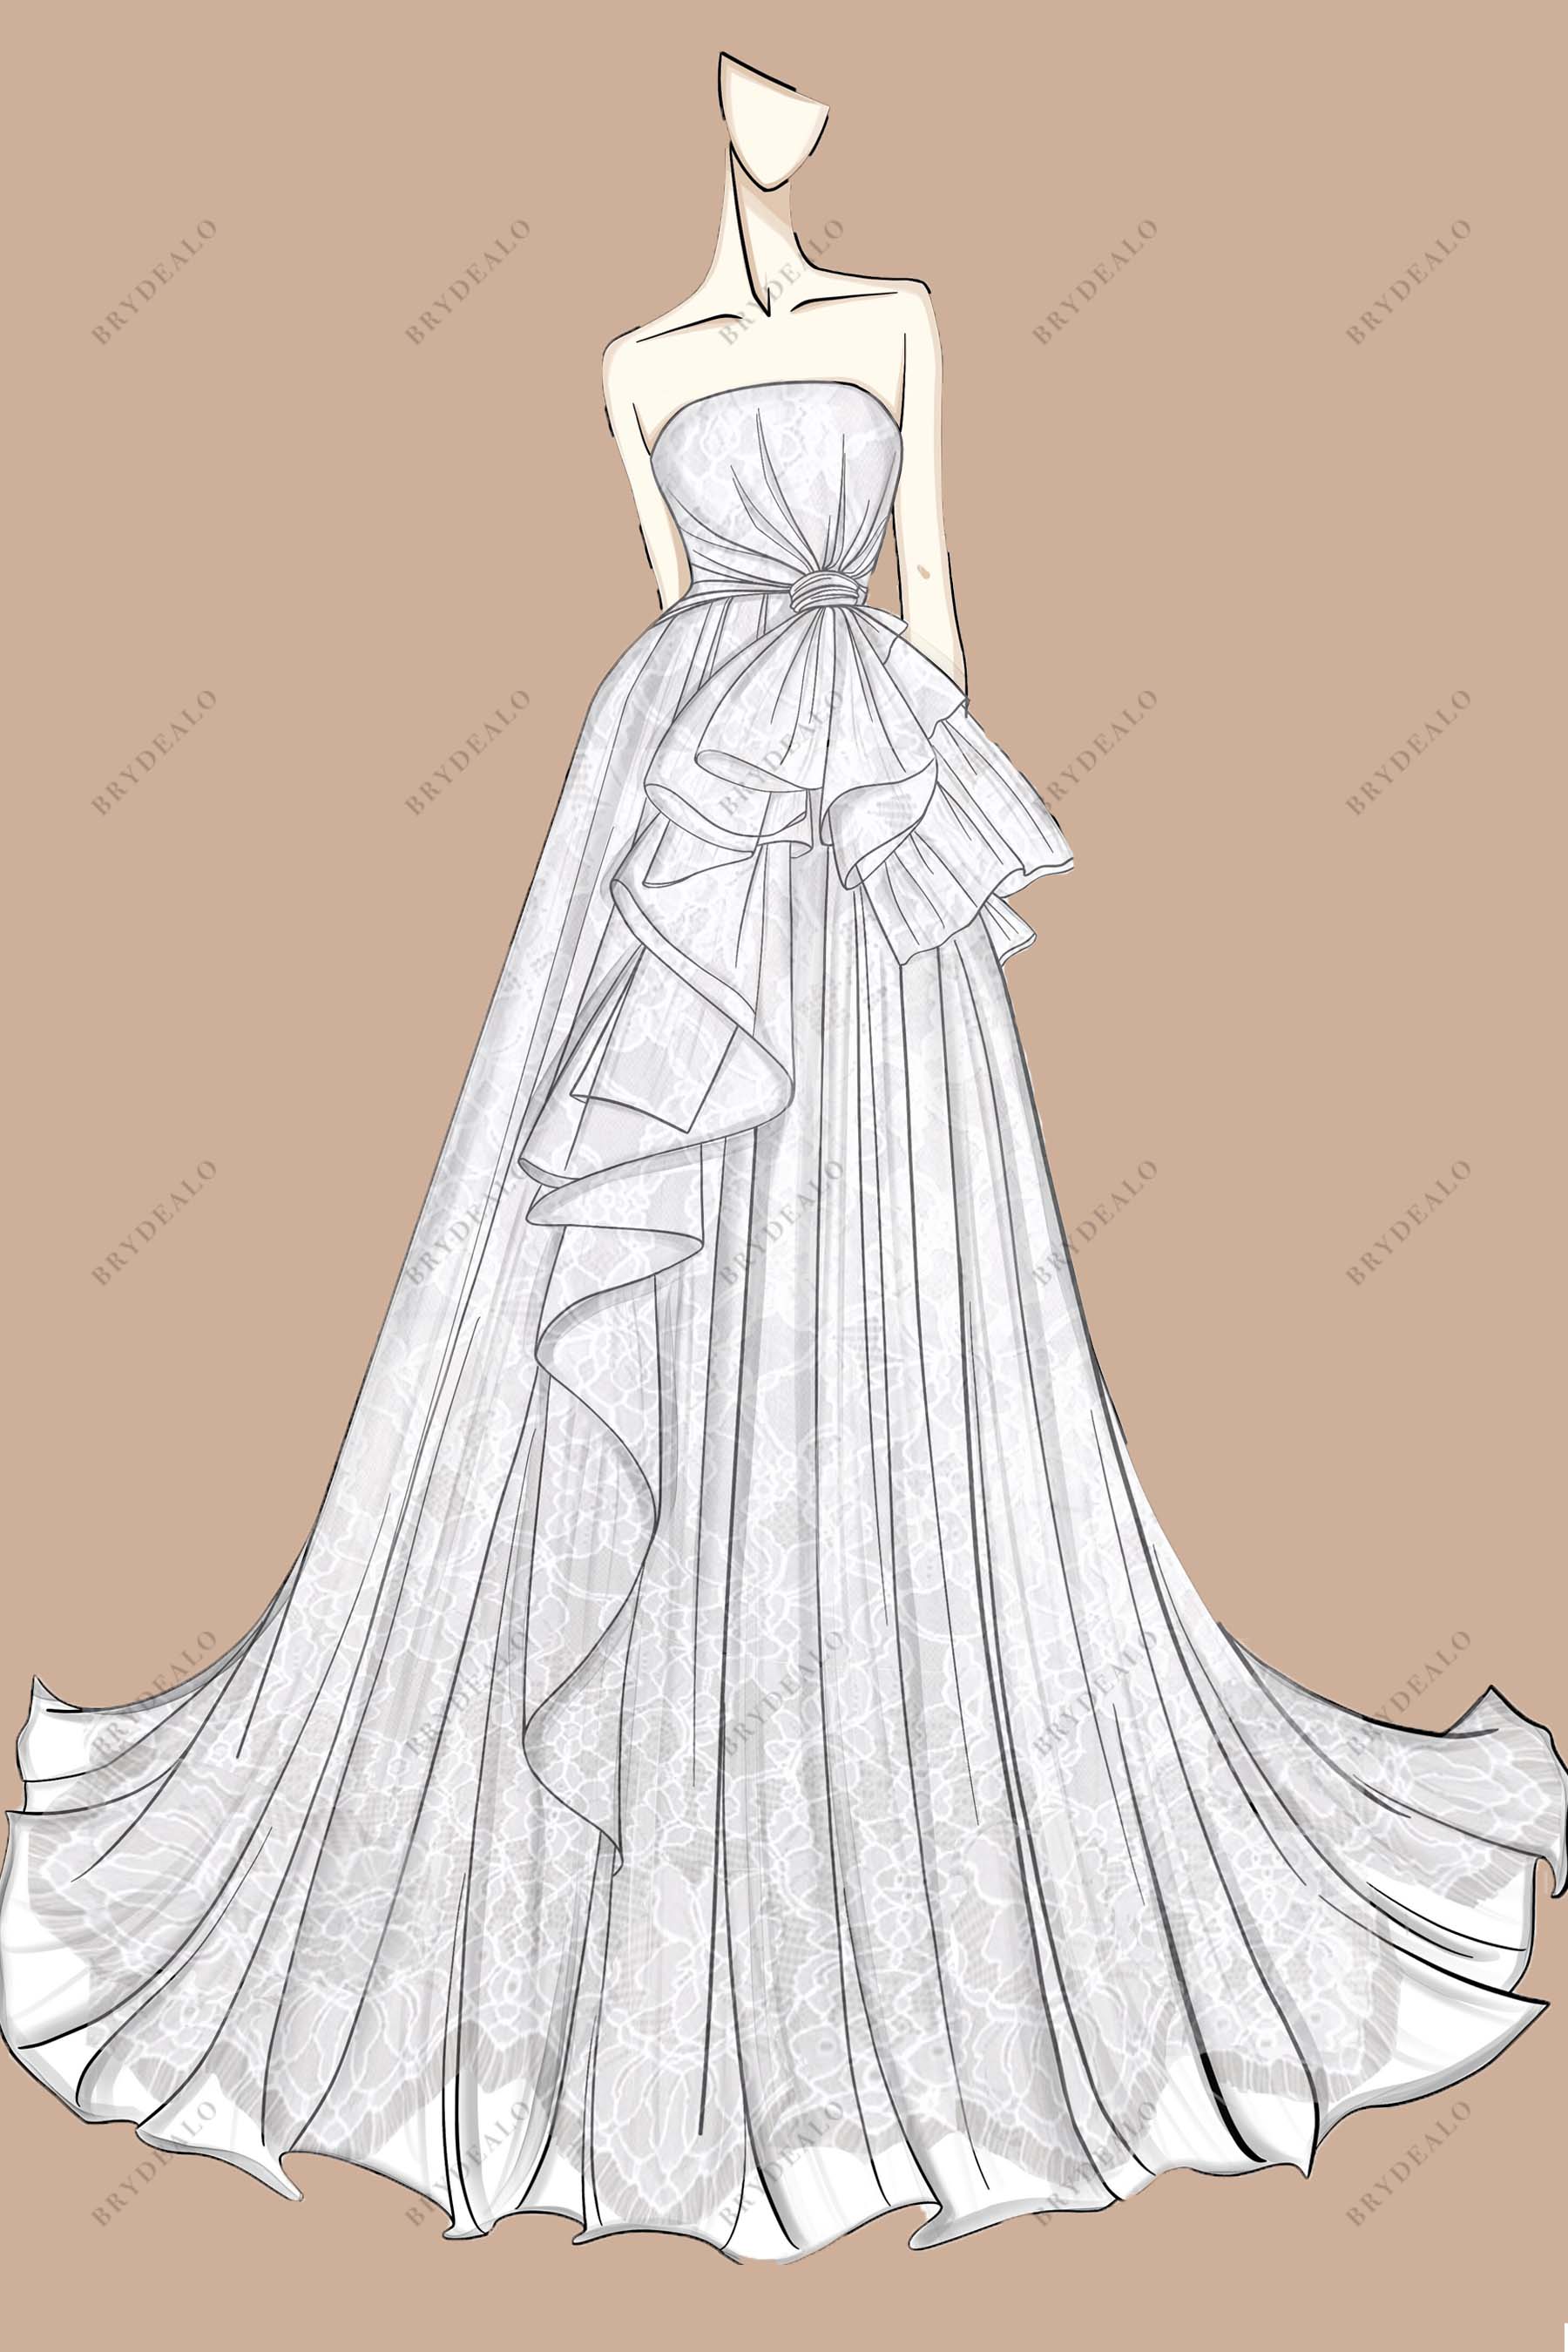 Designer Lace Cascading Ruffled A-line Wedding Dress Sketch